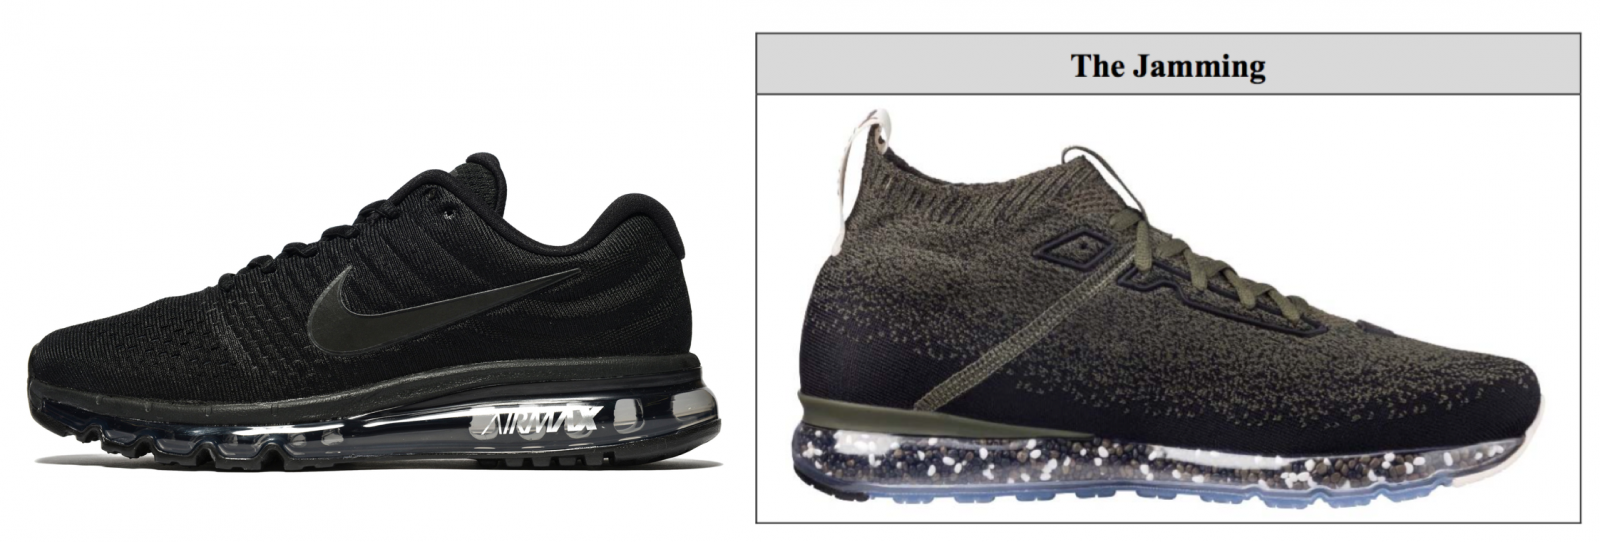  Nike Air sneaker (left) & Puma's air sneaker (right) 